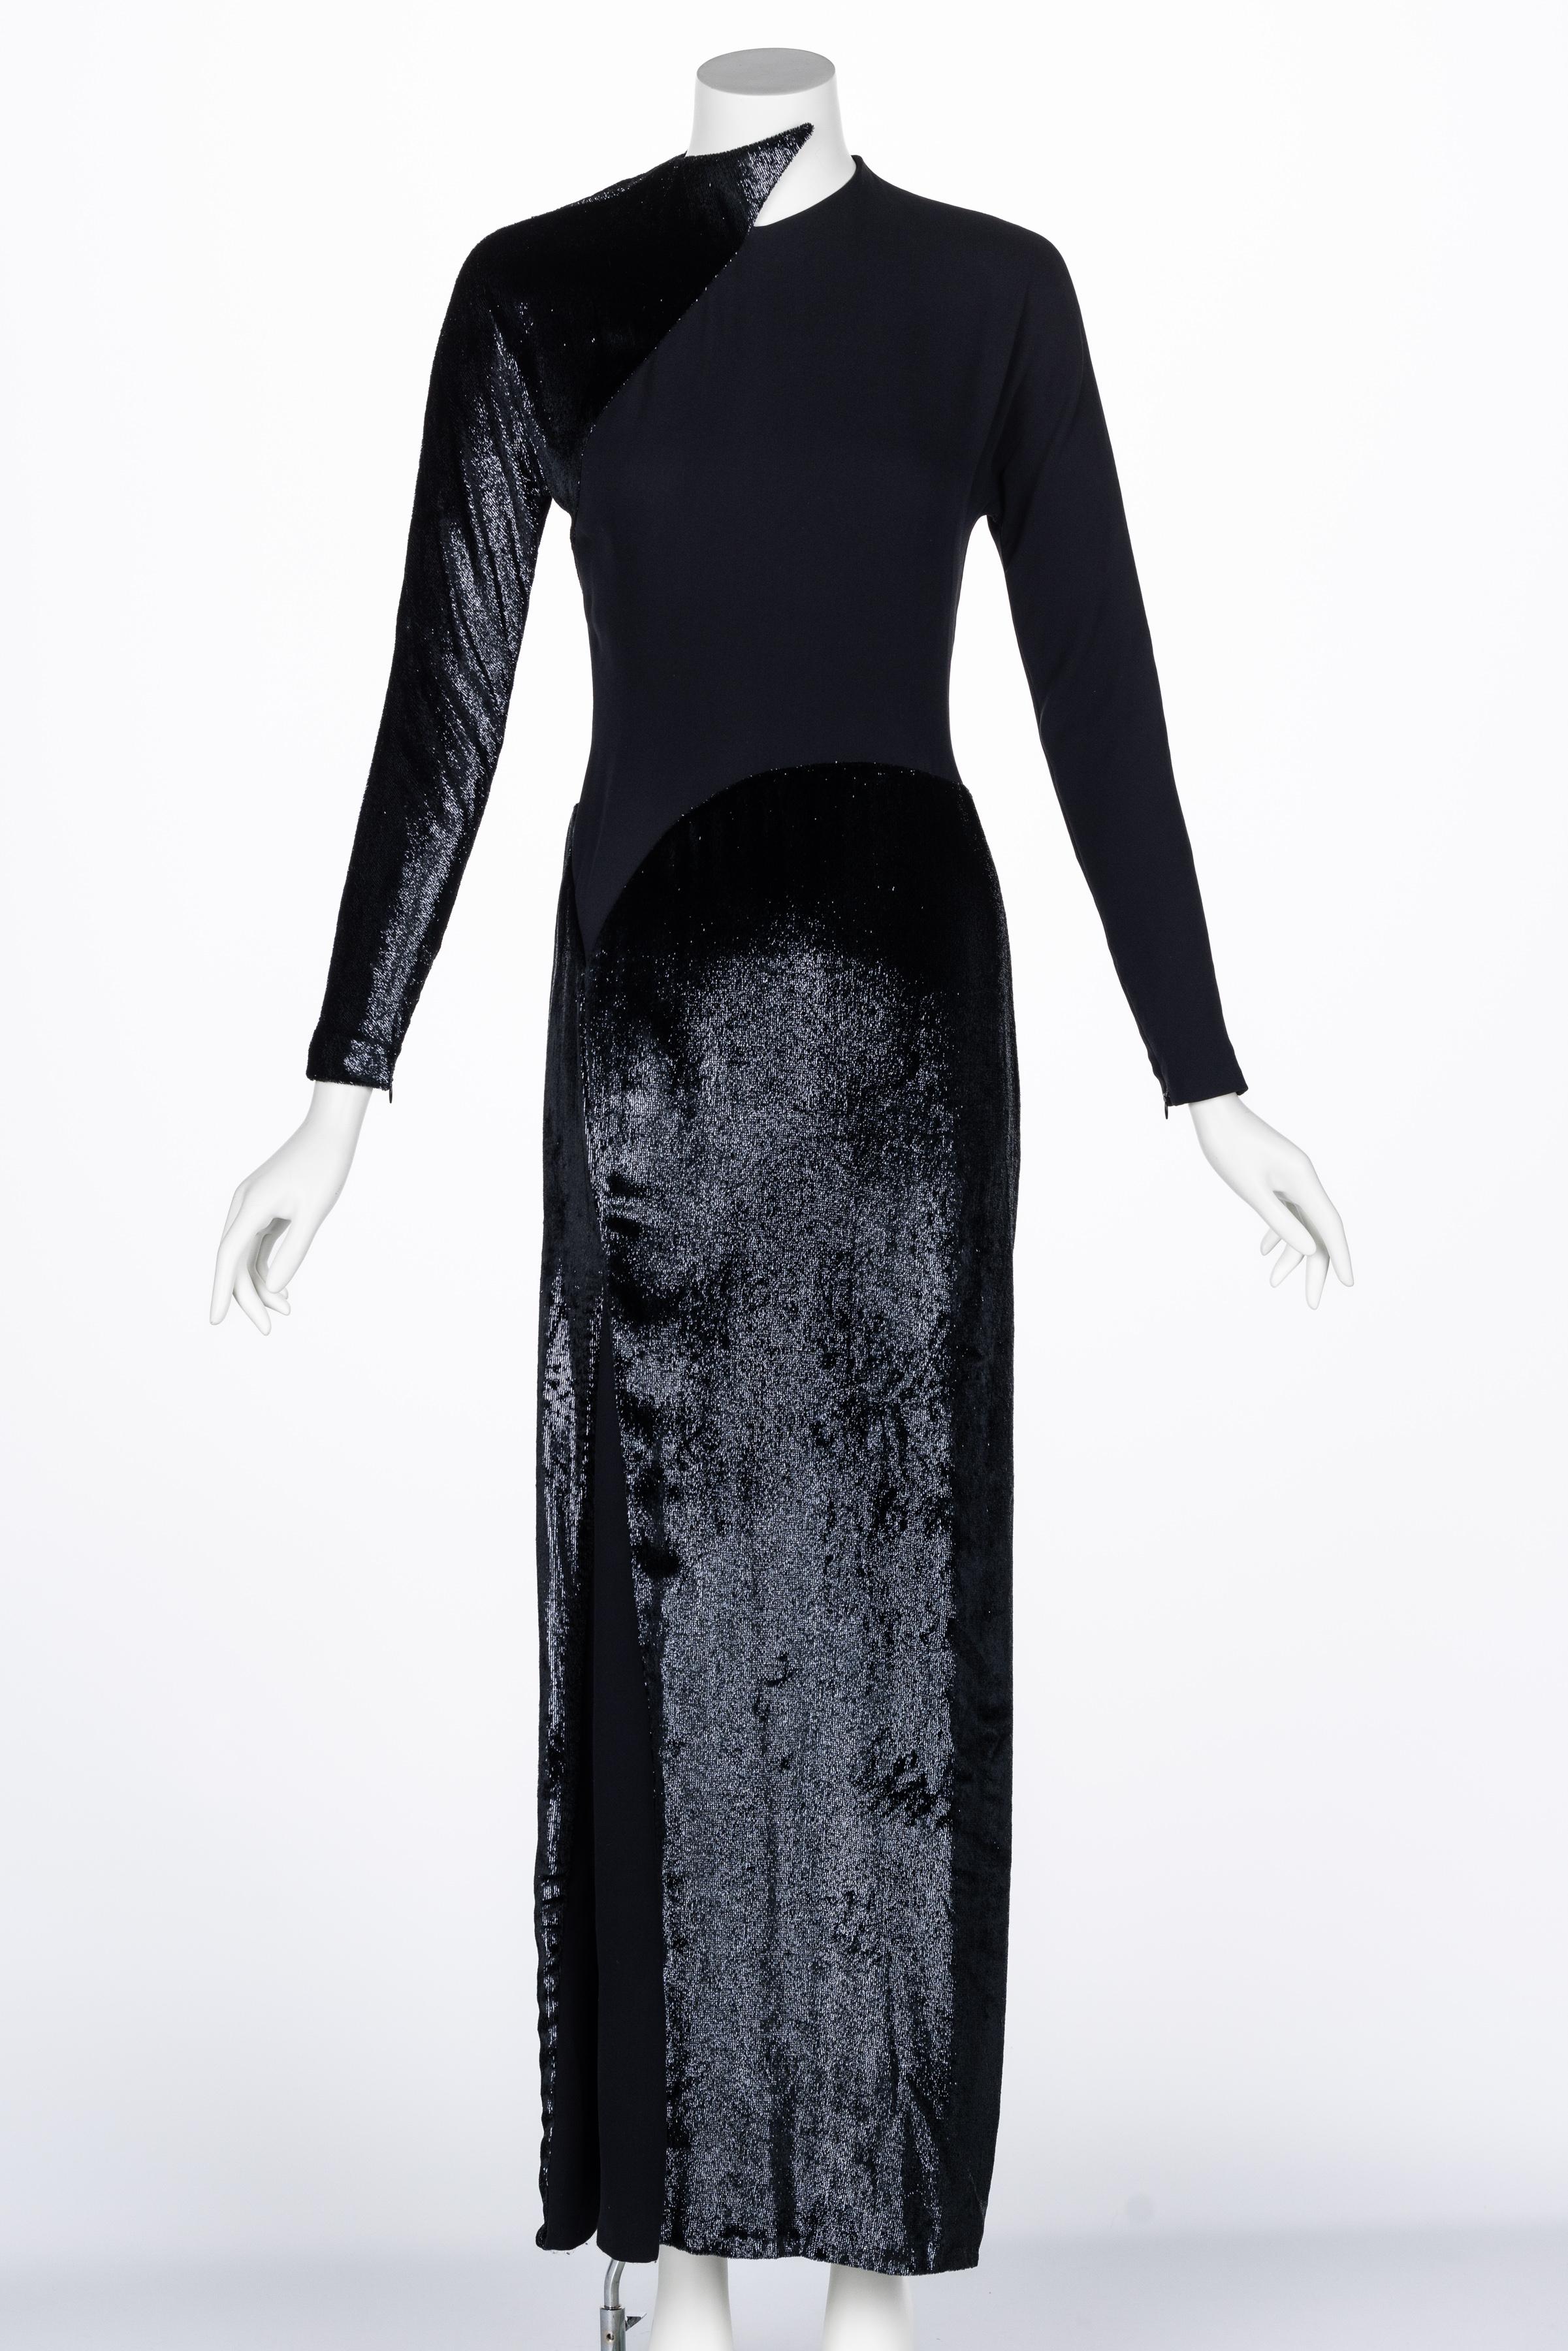 Women's or Men's Geoffrey Beene Black Crepe Panne Velvet Dress 1990s For Sale